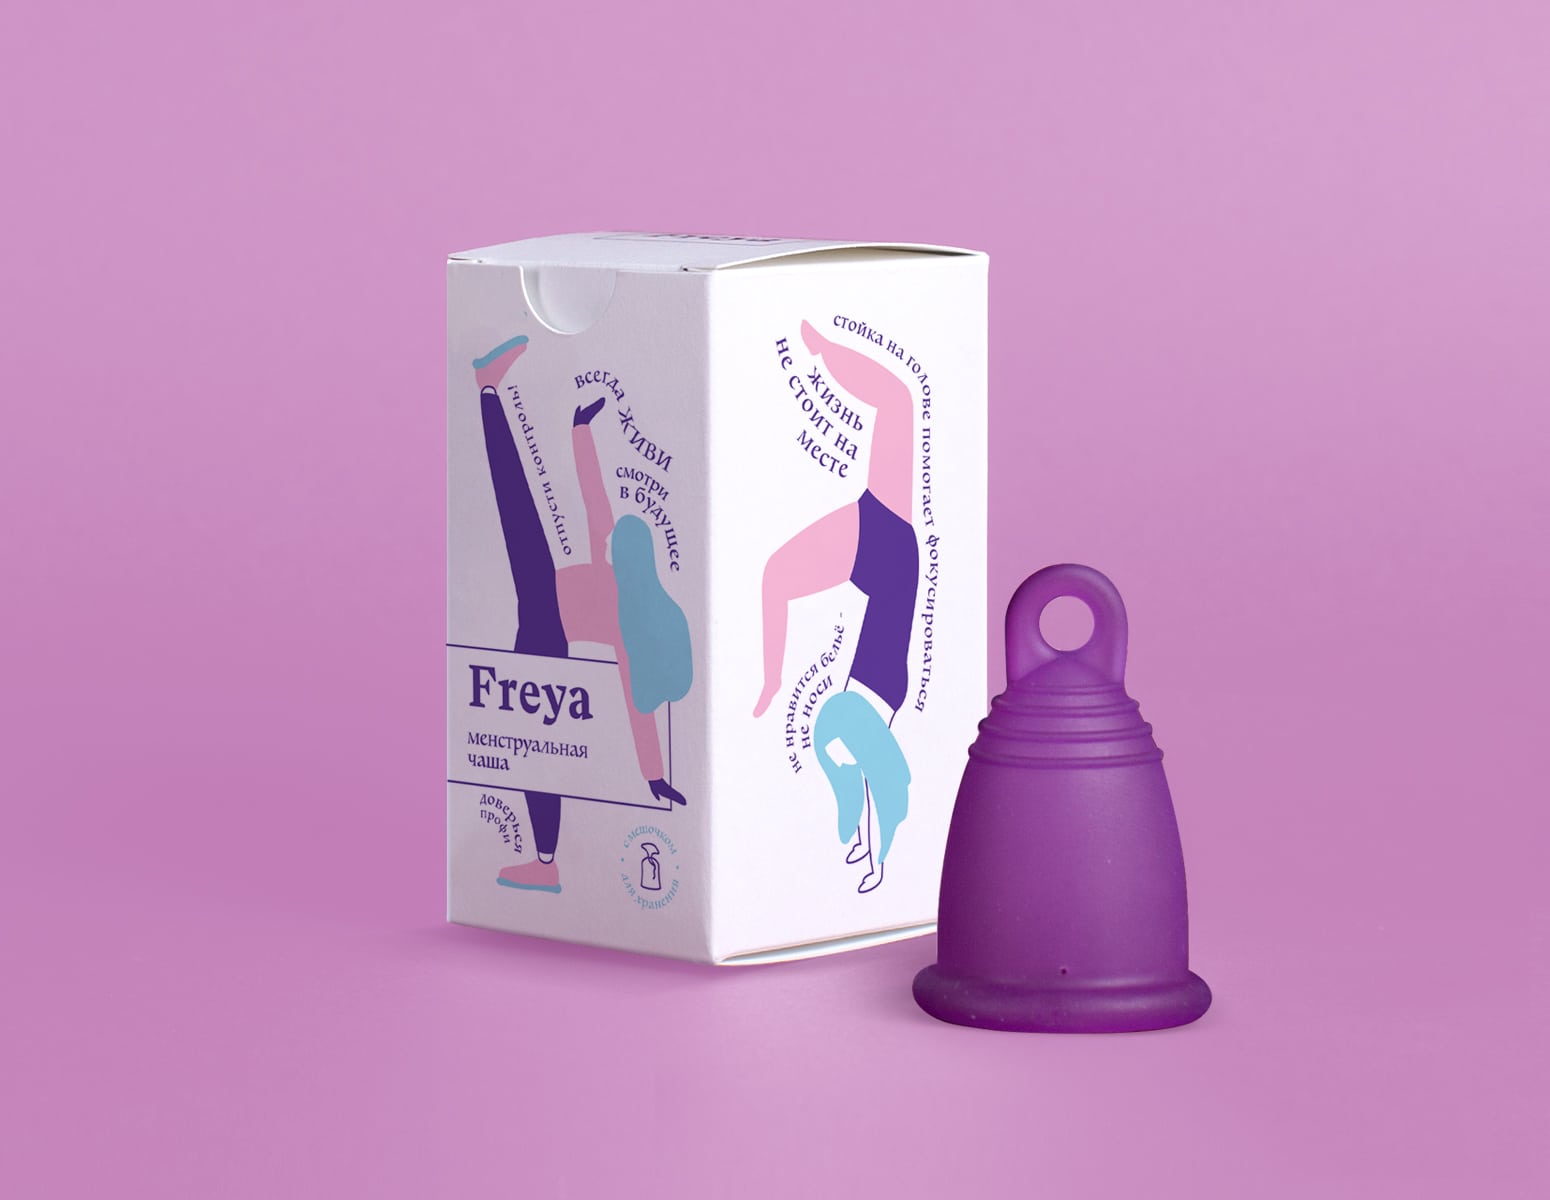 Freya packaging